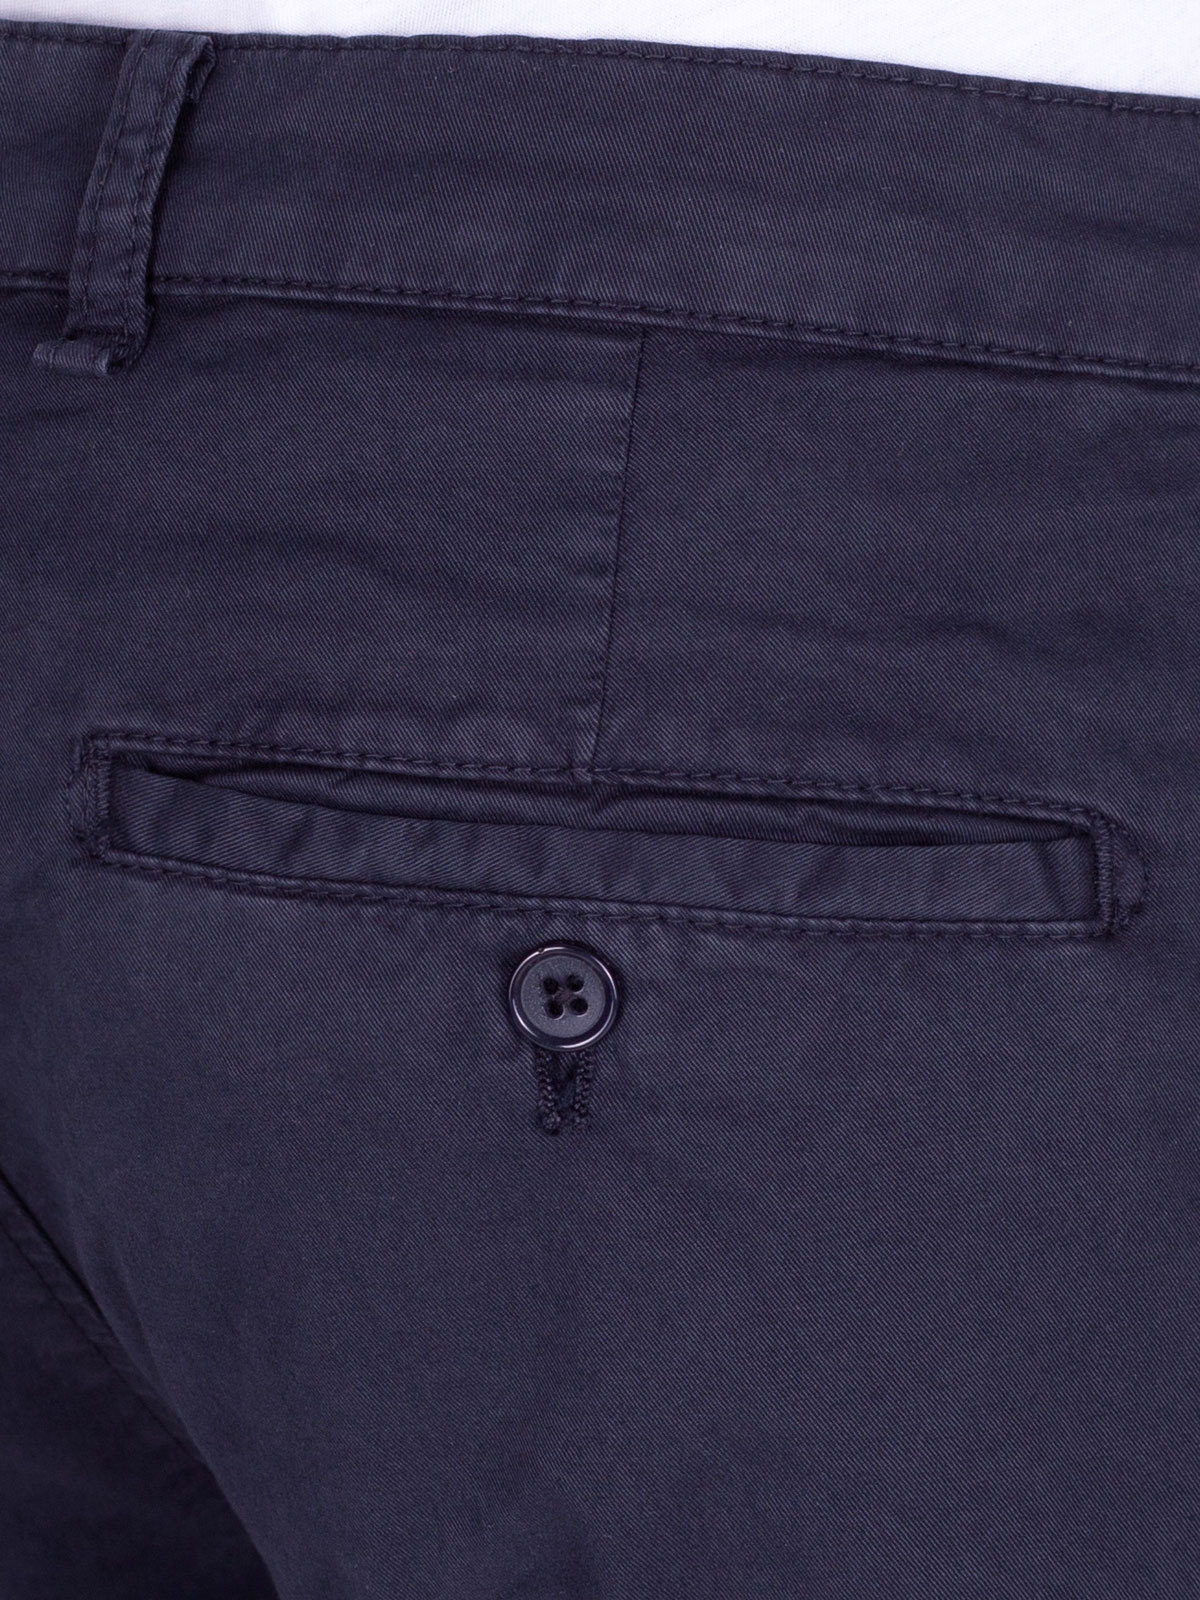 Pantaloni bleumarin cu silueta mulată - 60277 € 49.49 img4